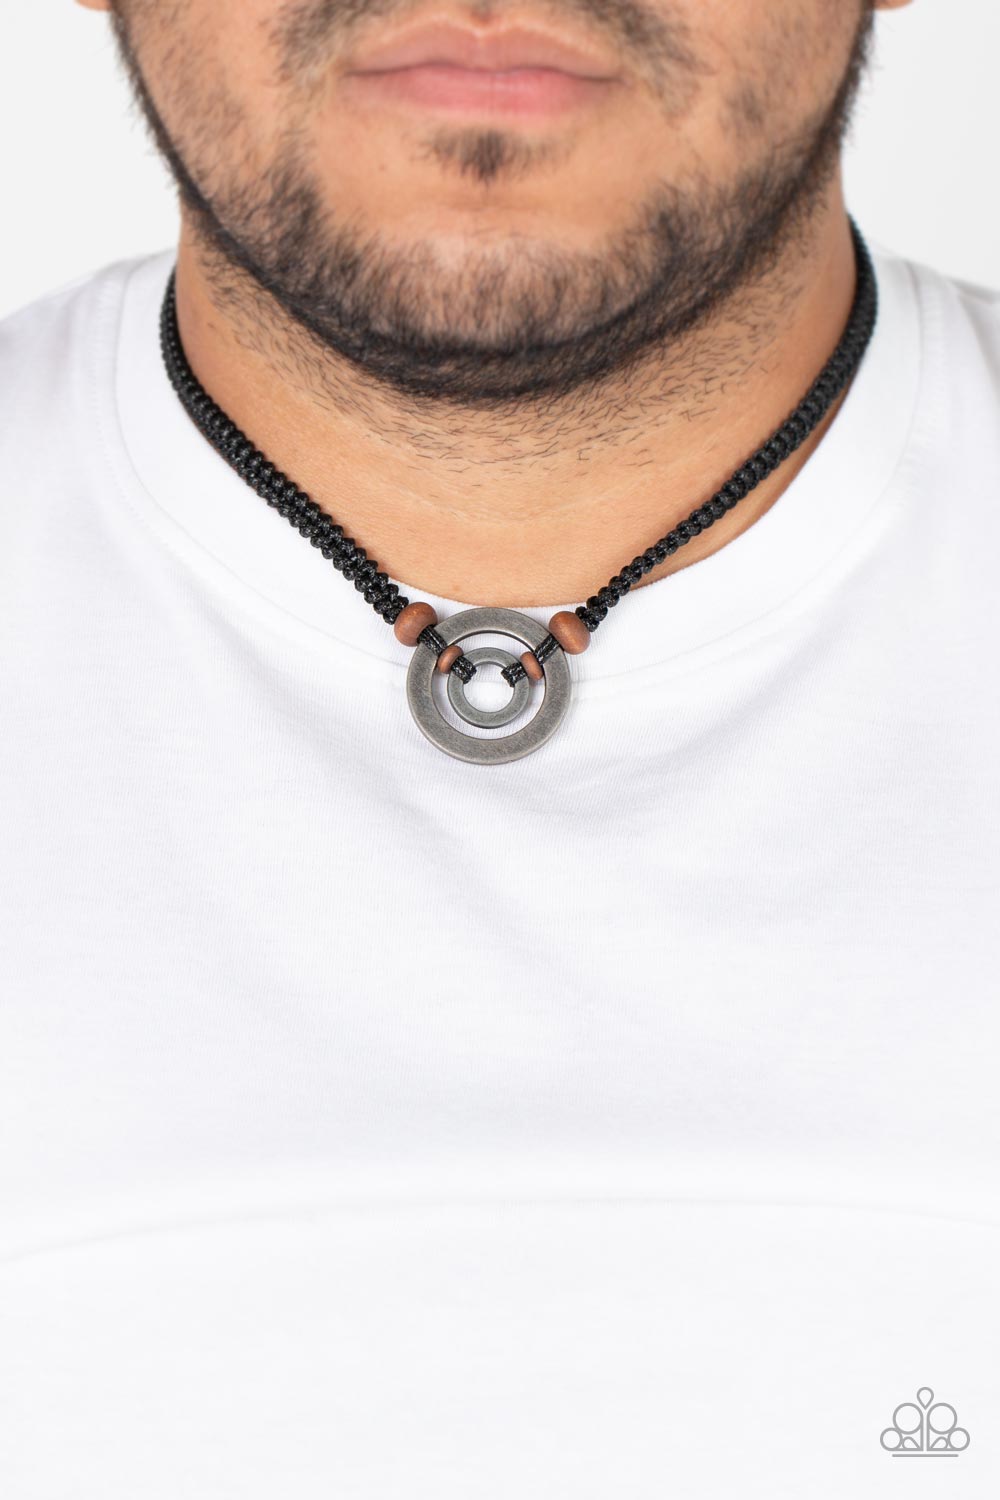 Paparazzi Rural Reef Black Necklace. Get Free Shipping. #P2UR-BKXX-172XX. Men's accessories